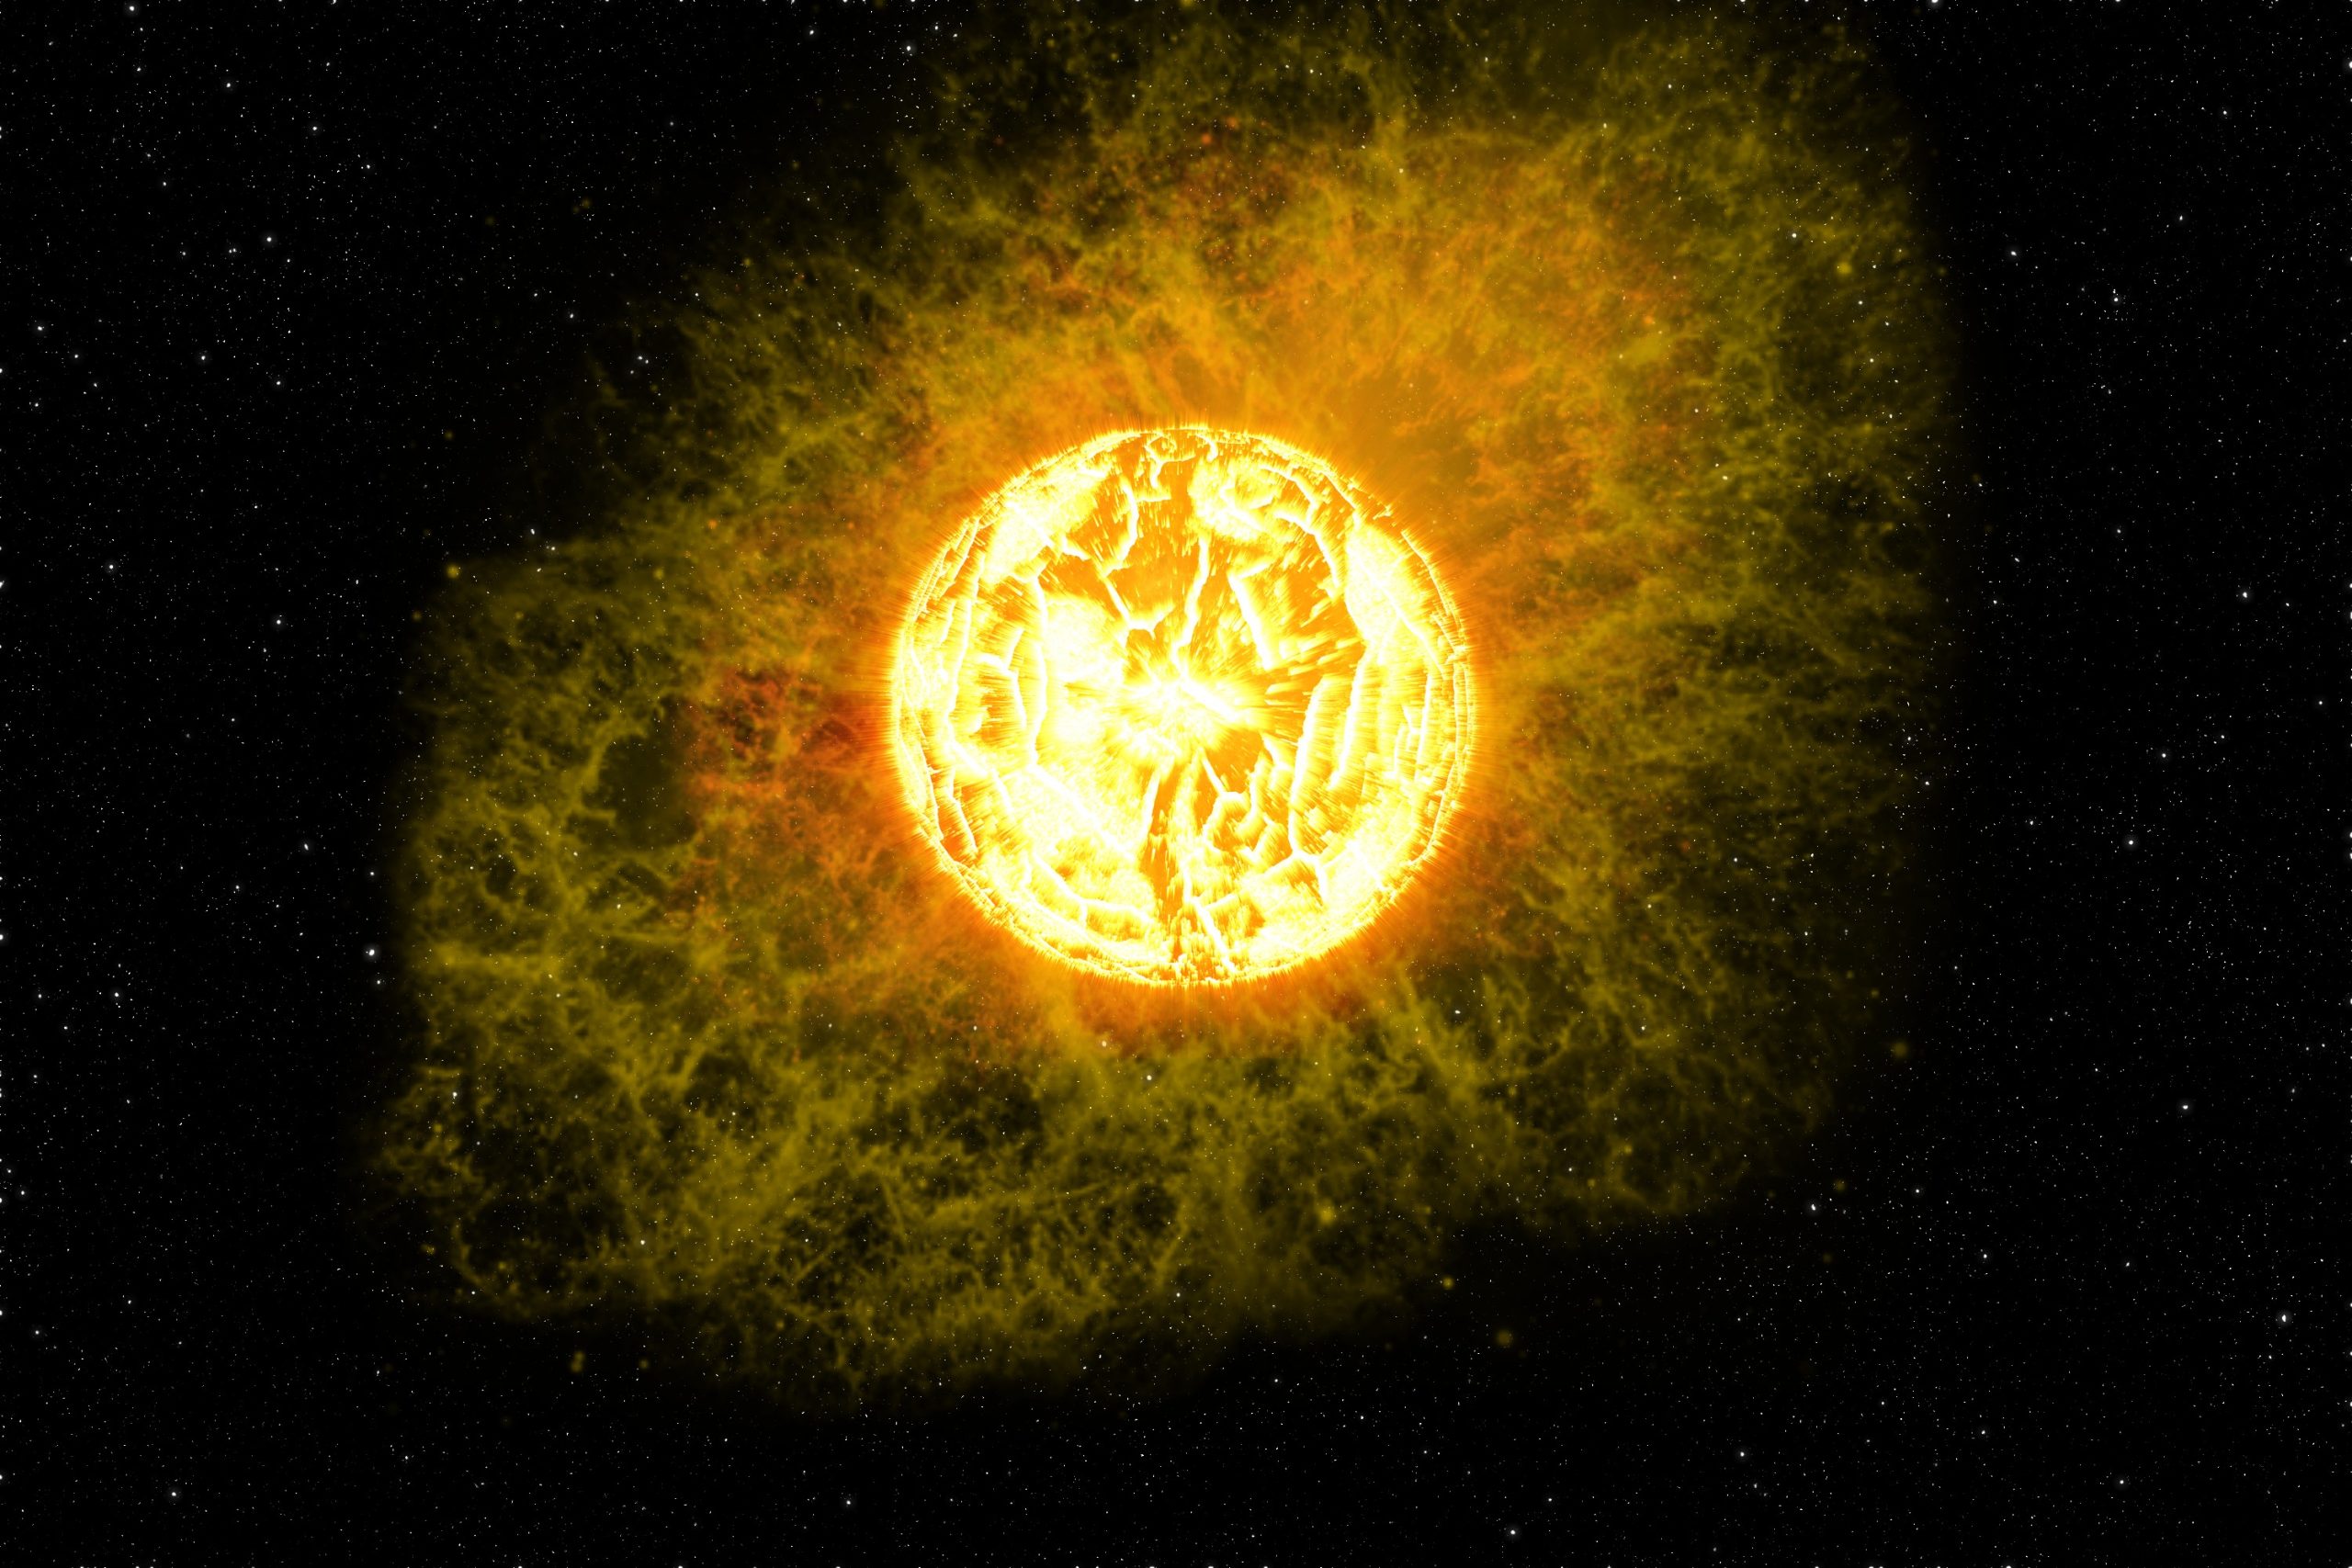 An illustration of a star going supernova. Depositphotos.